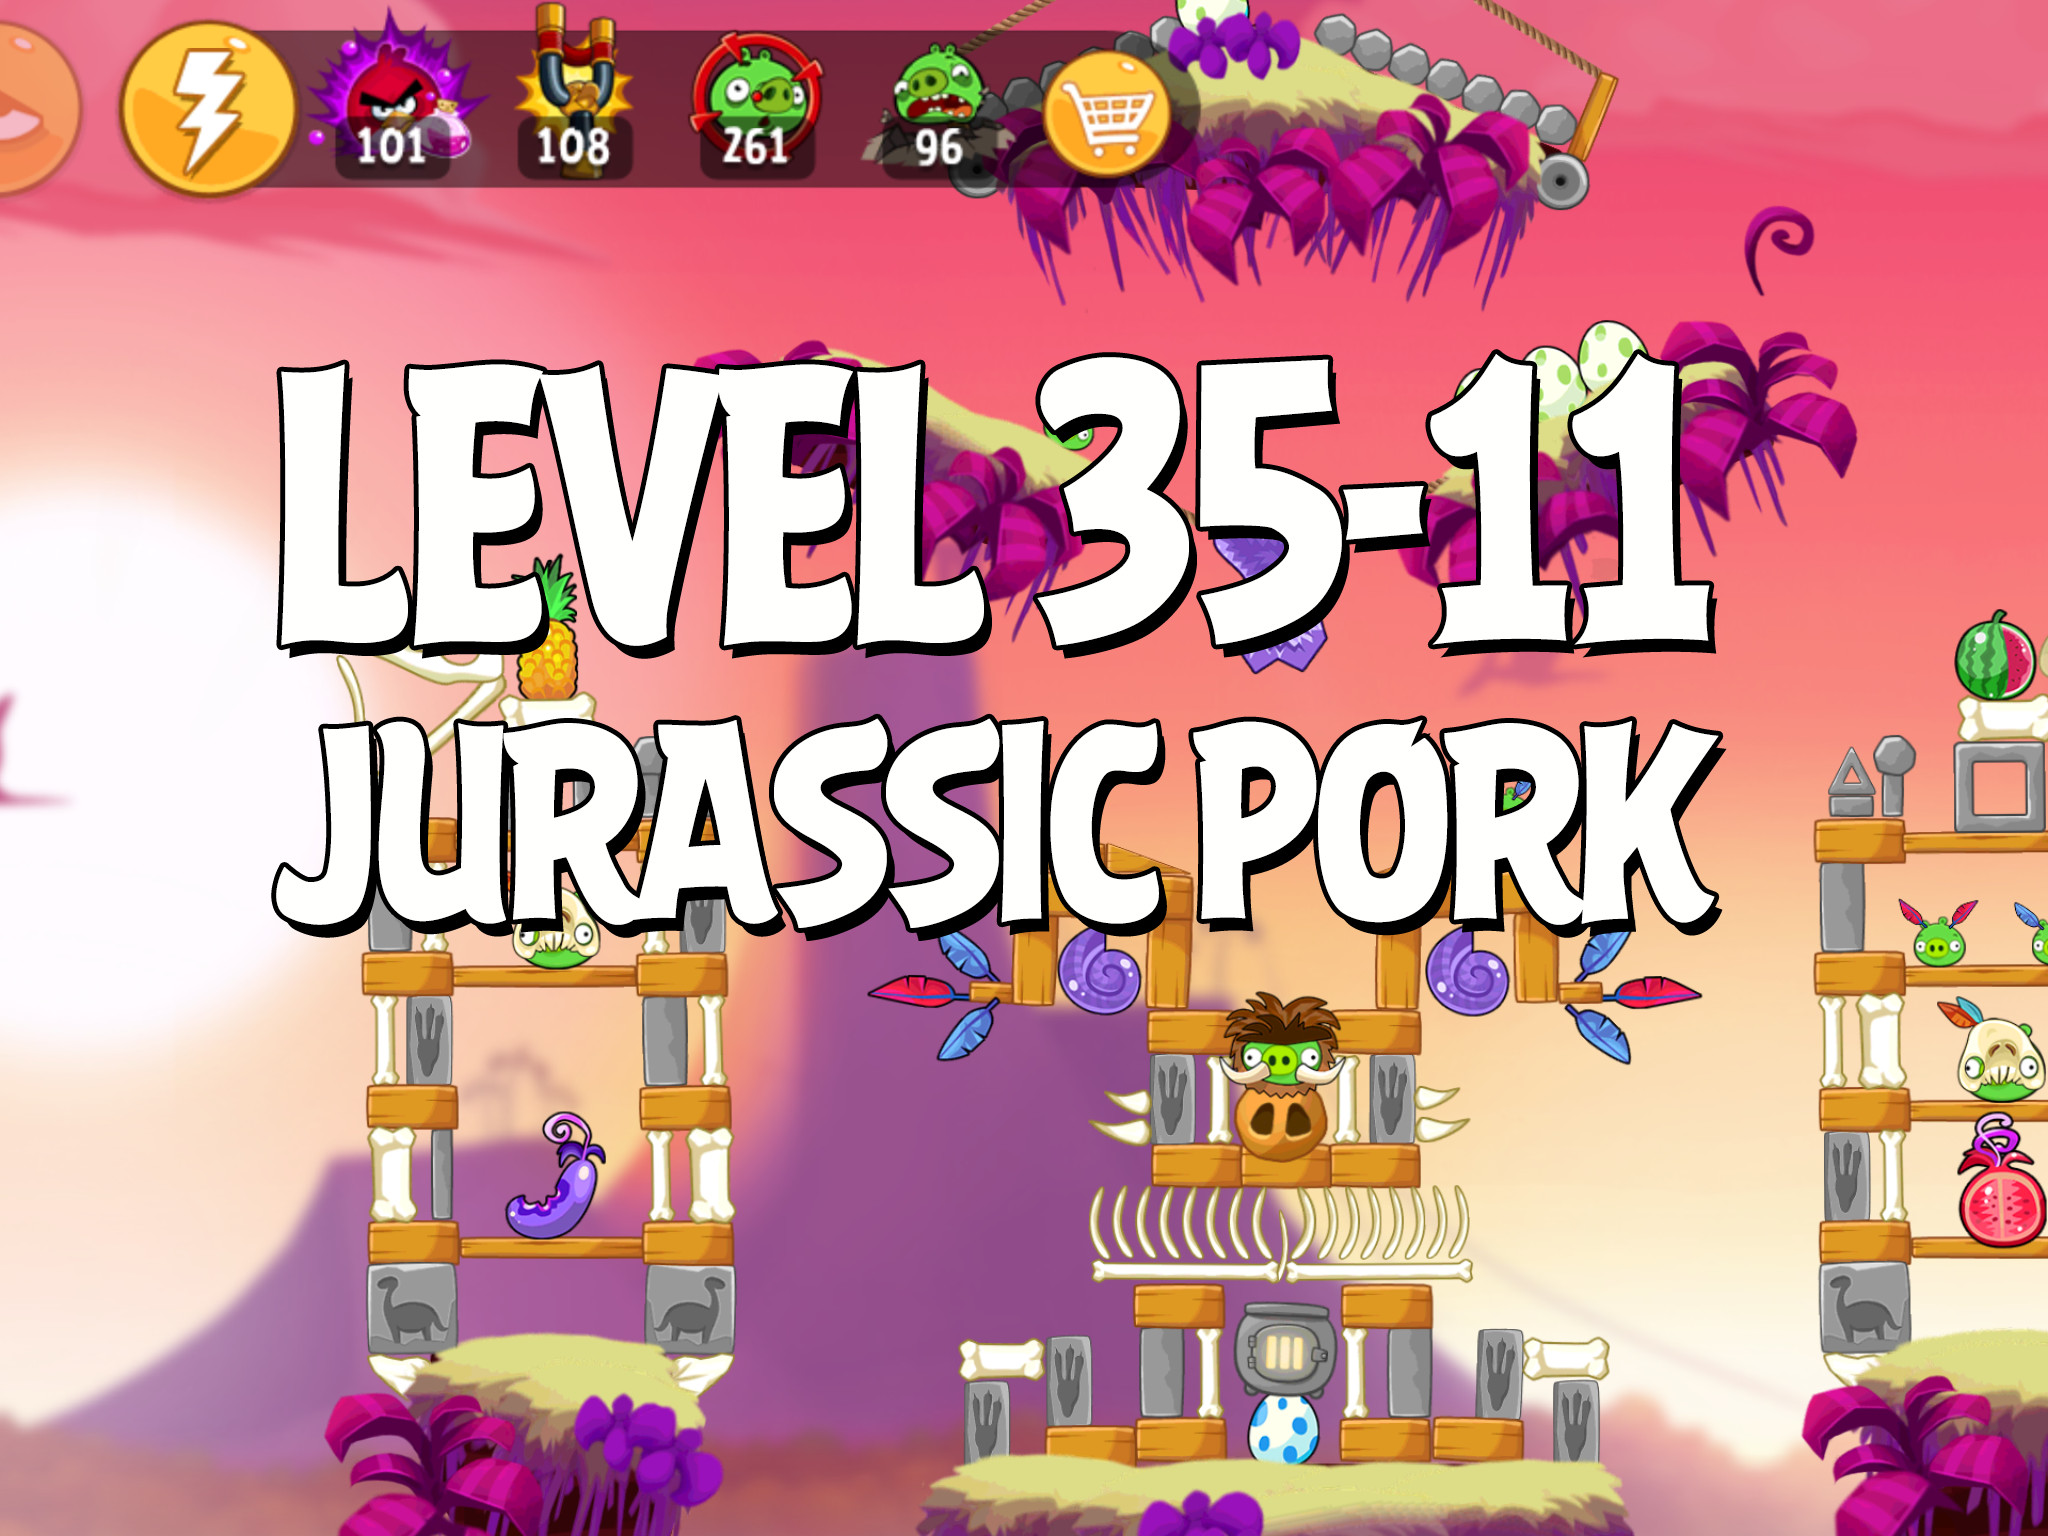 Angry-Birds-Jurassic-Pork-Level-35-11